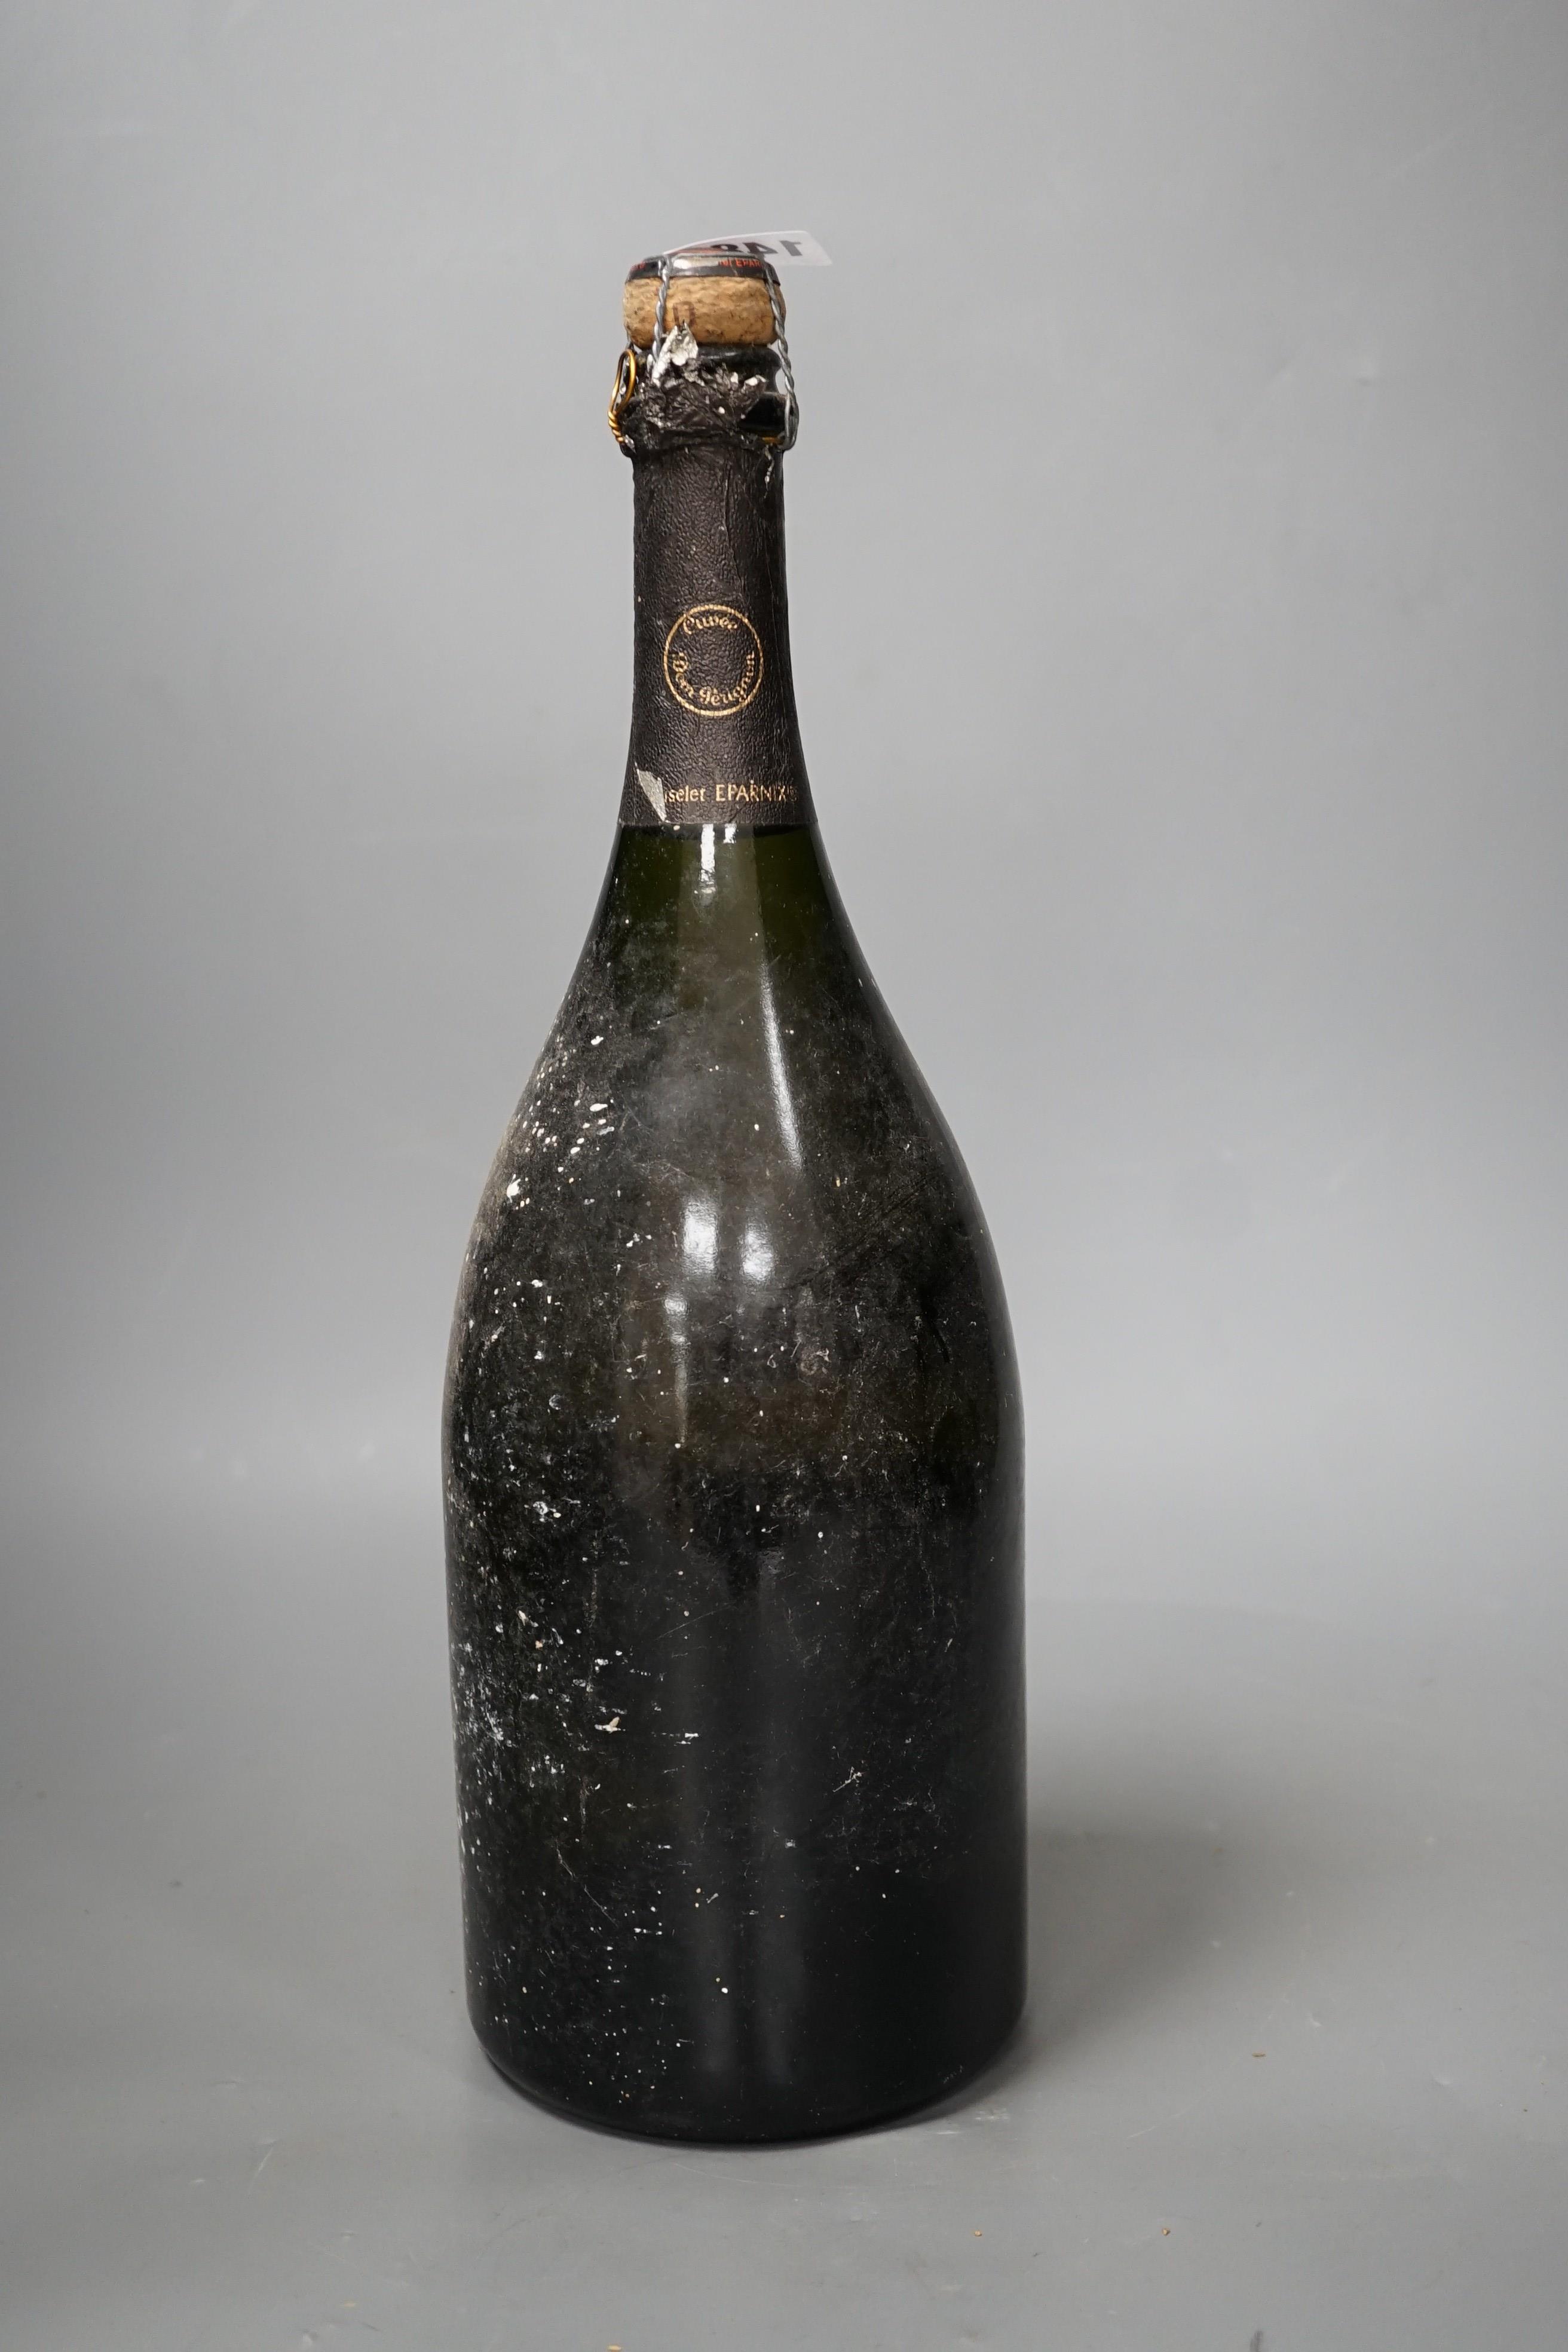 A magnum bottle of 1983 Dom Perignon